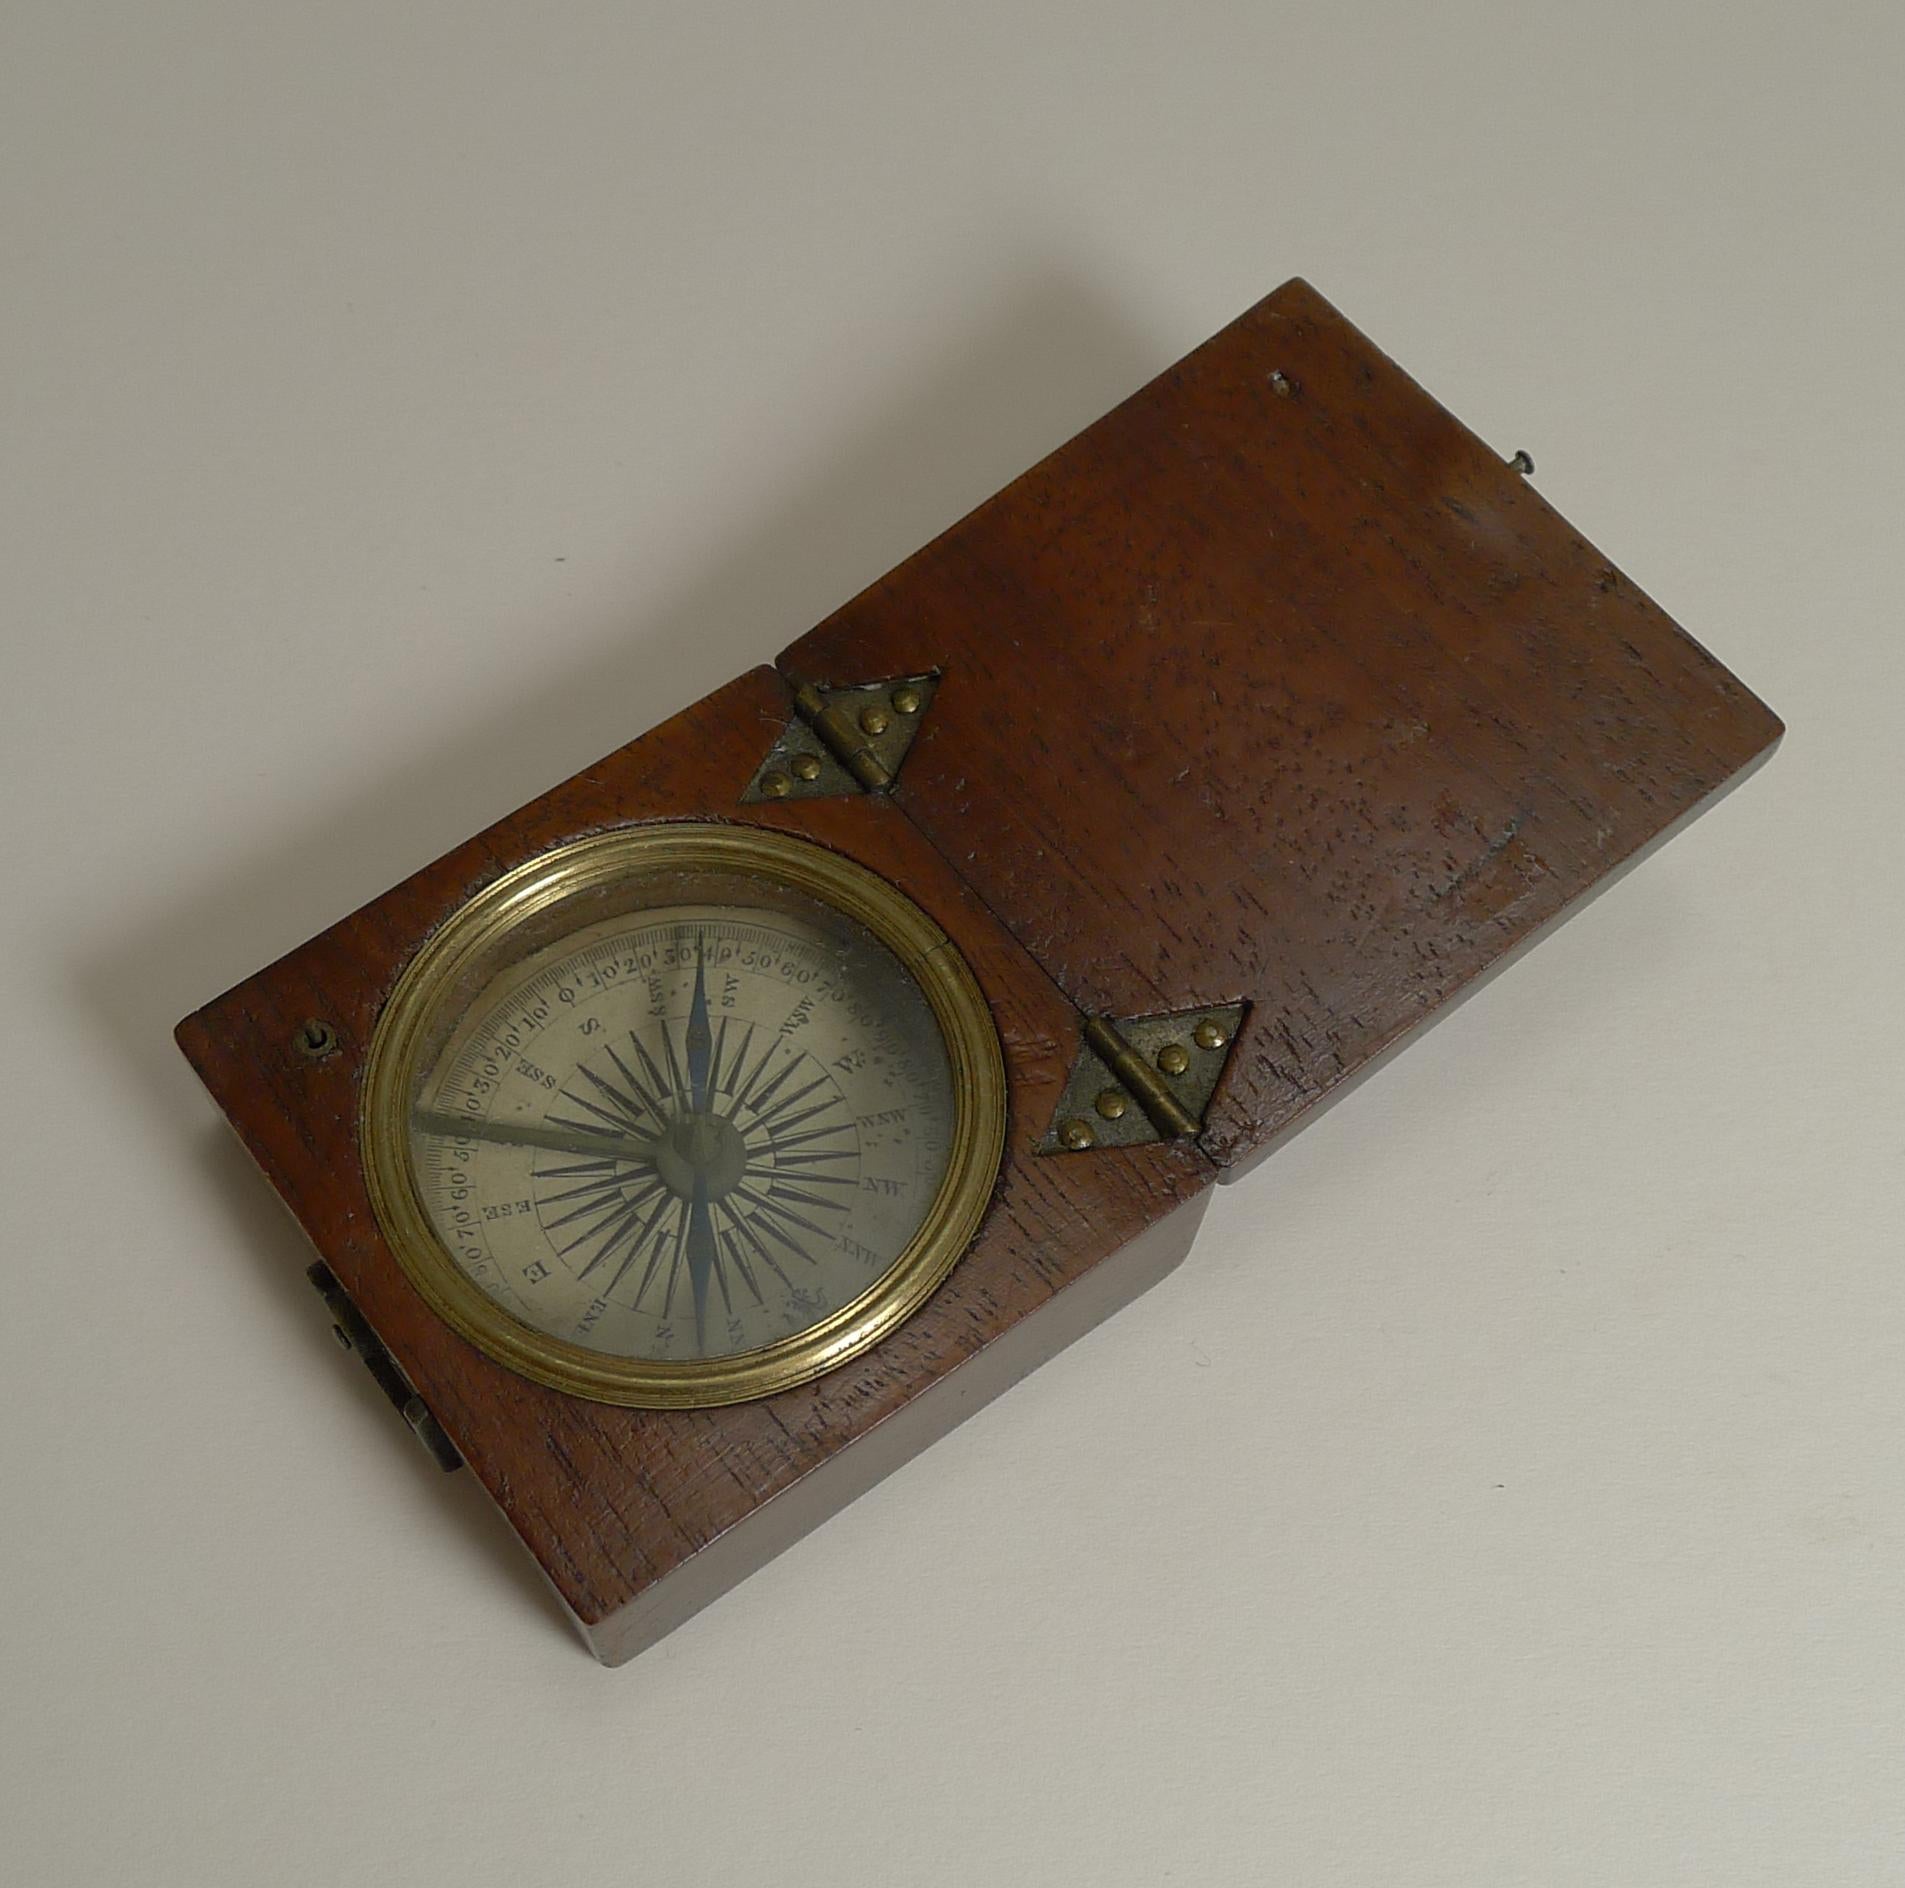 1800s compass